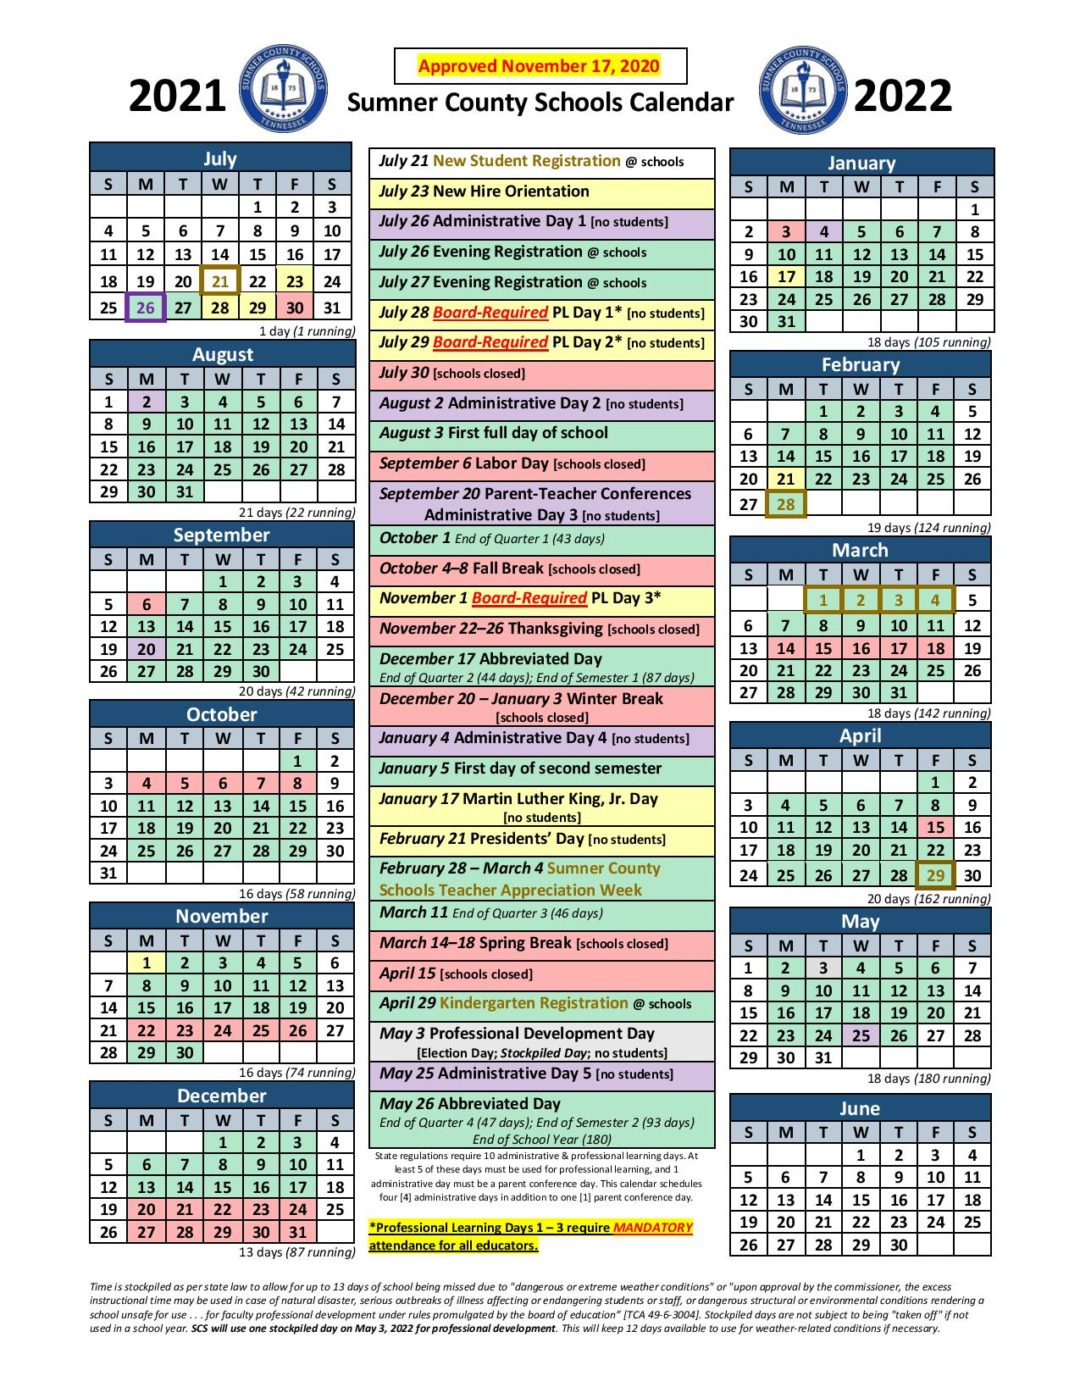 Sumner County School Calendar Holidays 2021-2022